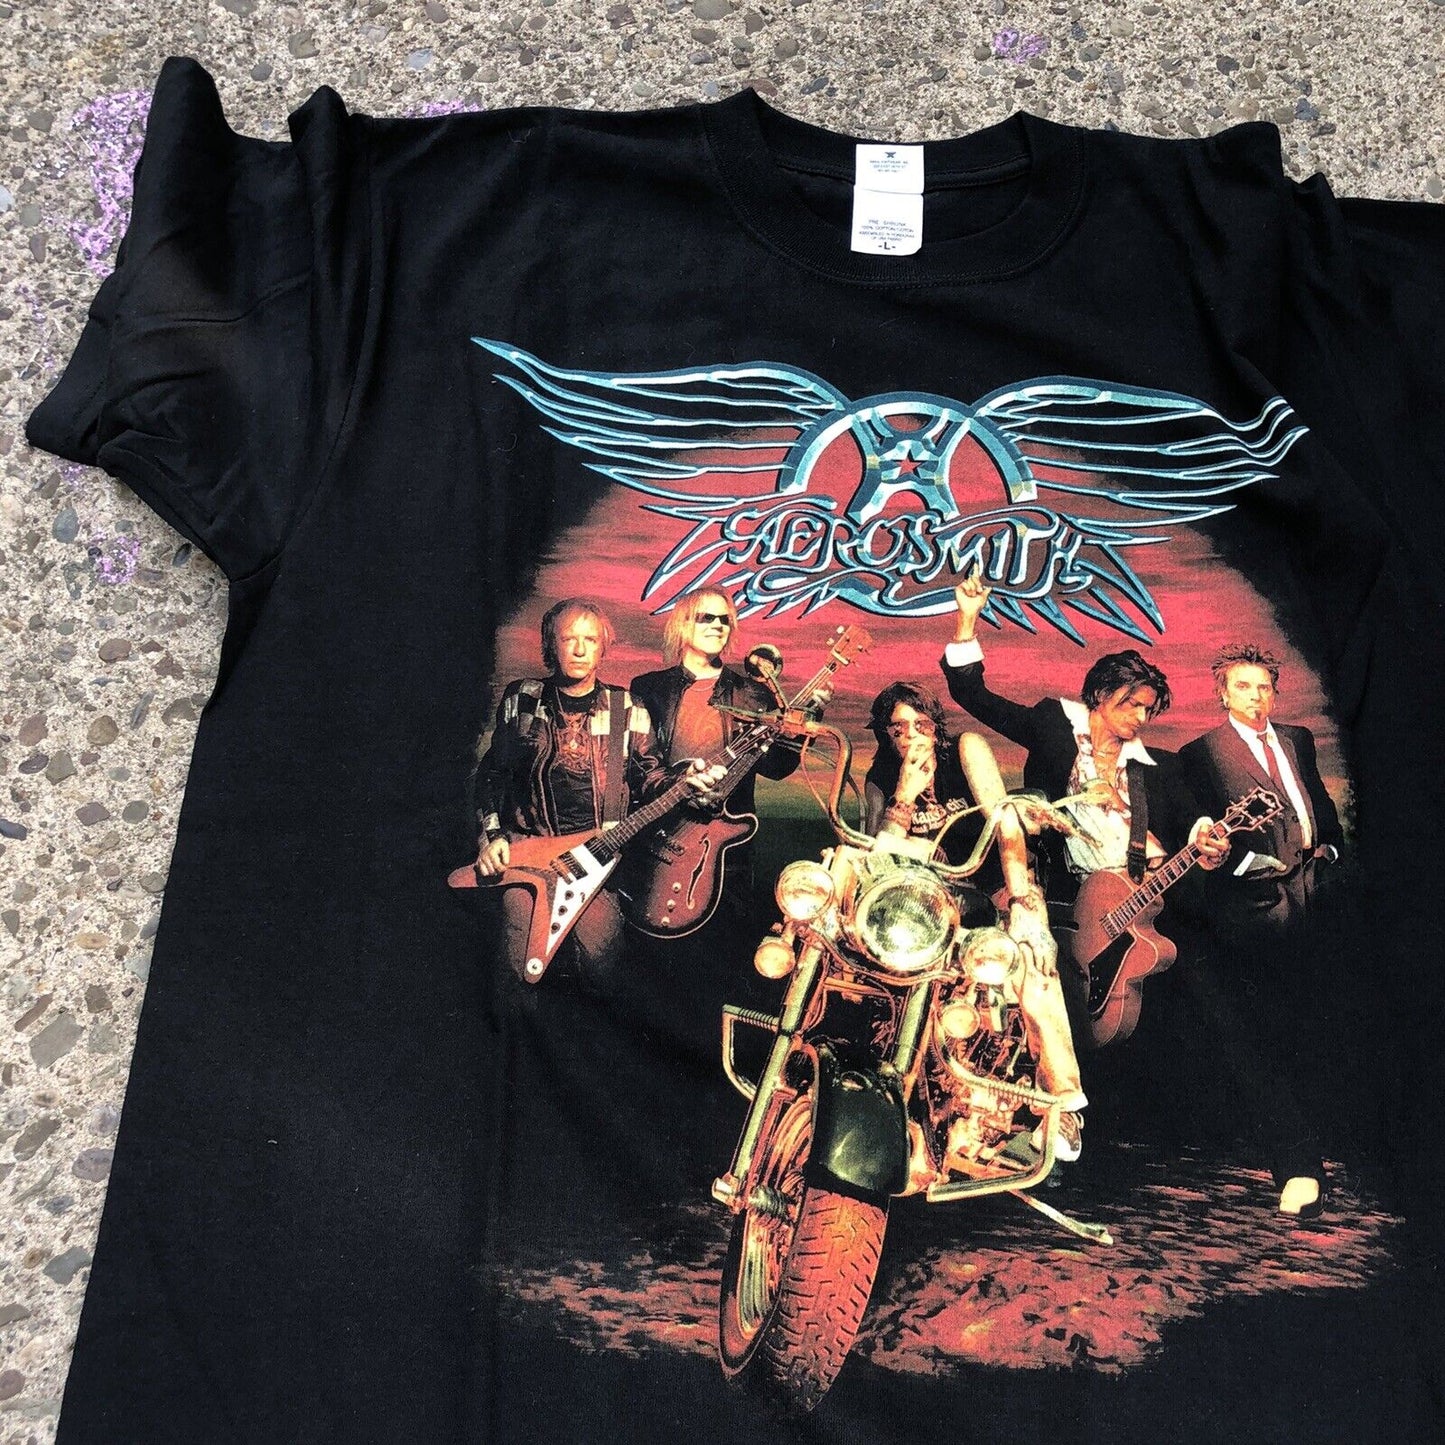 2005-06 Aerosmith Rockin' The Joint Tour T-Shirt Size Medium Black Band Tee